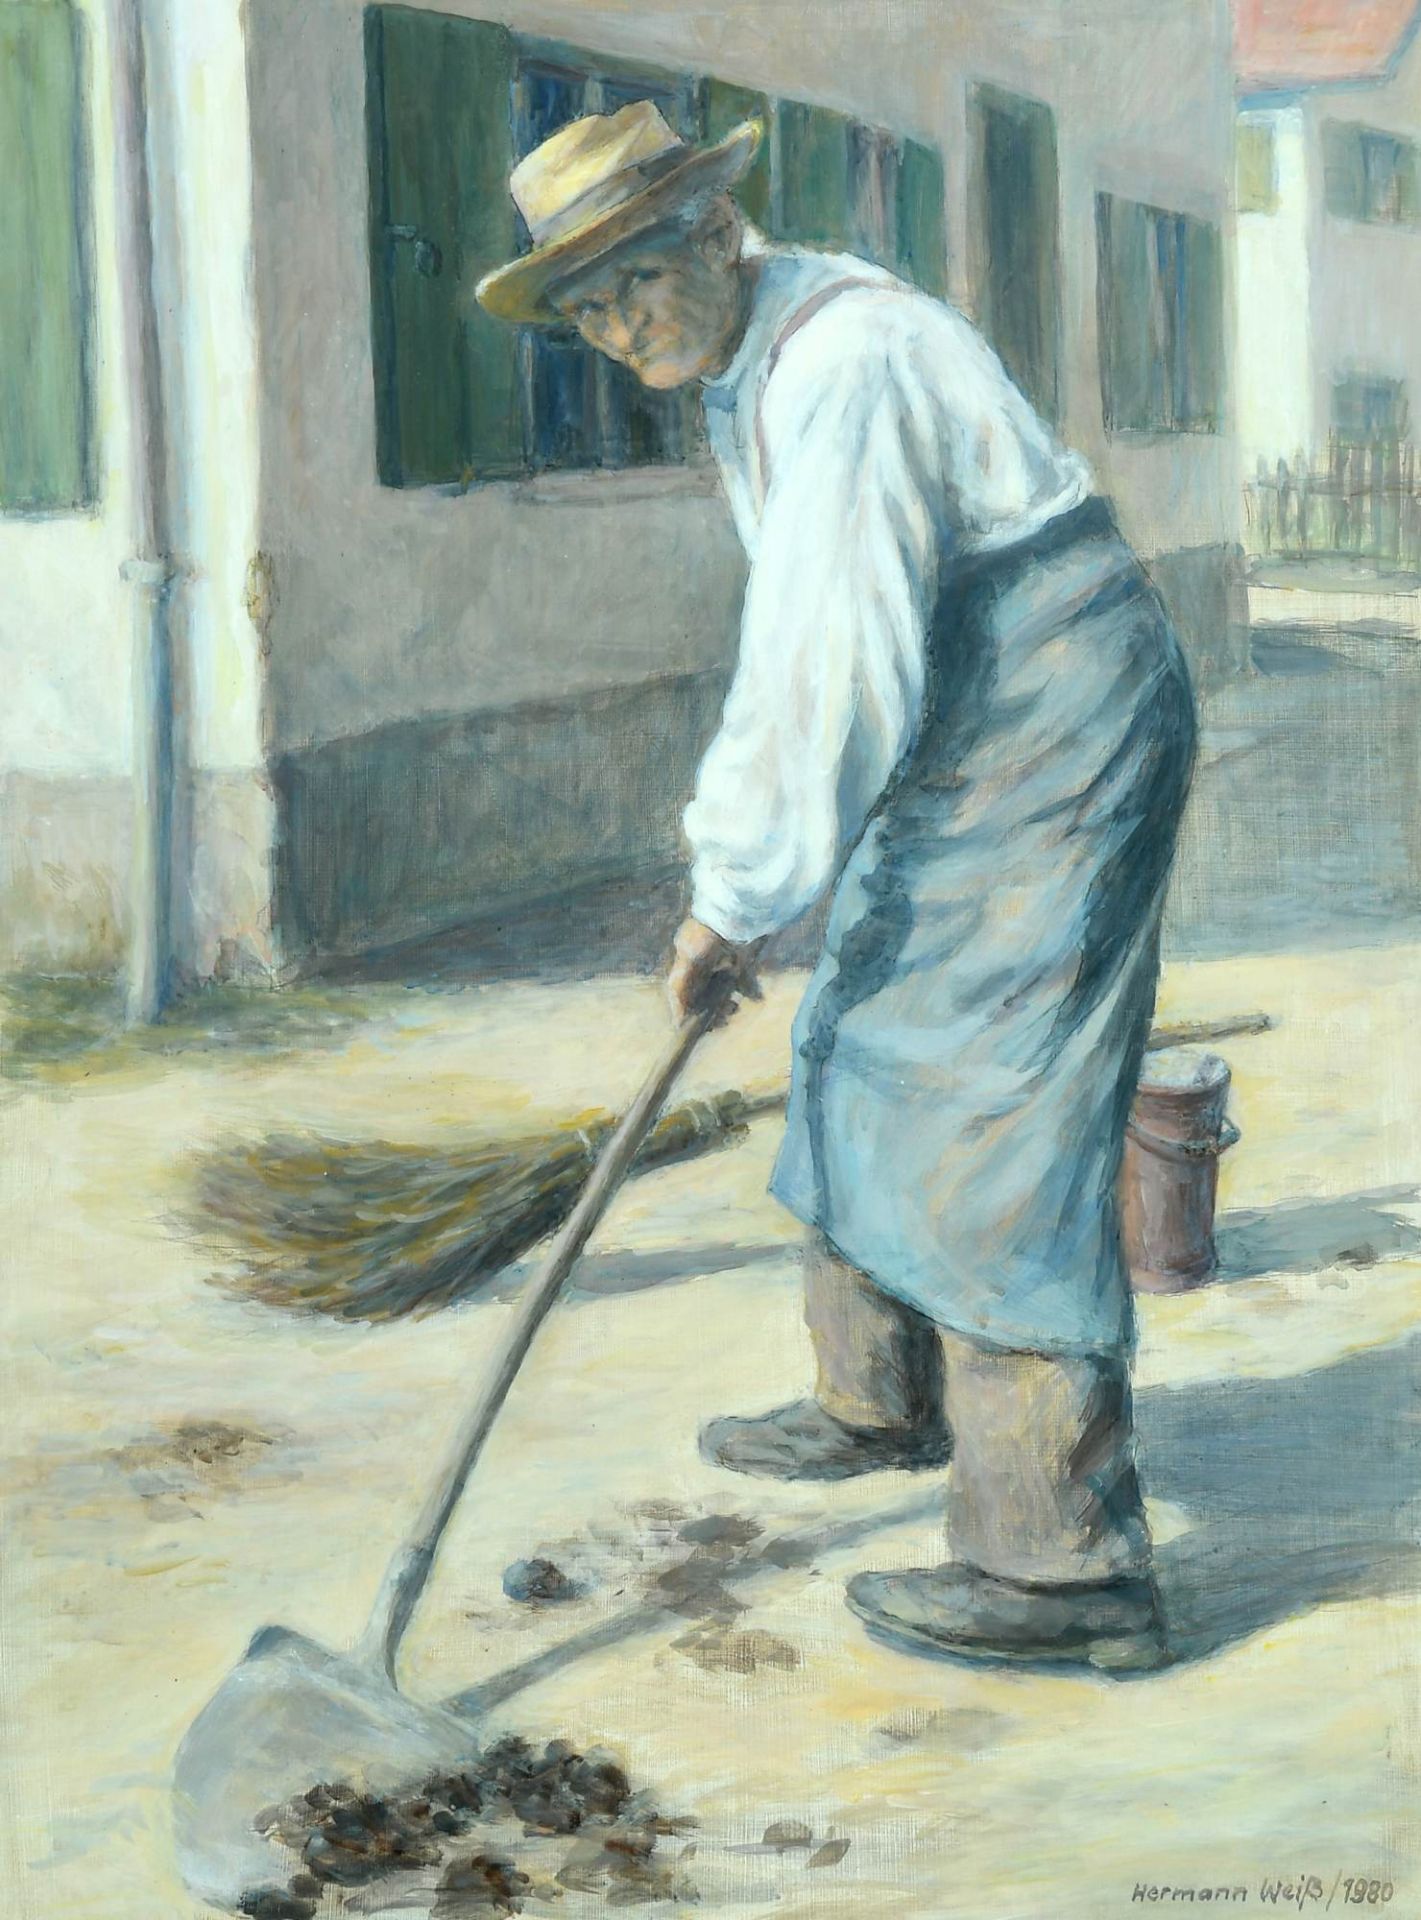 Weiß, Hermann, Allgäuer Künstler tätig in Obergünzburg - Image 2 of 2